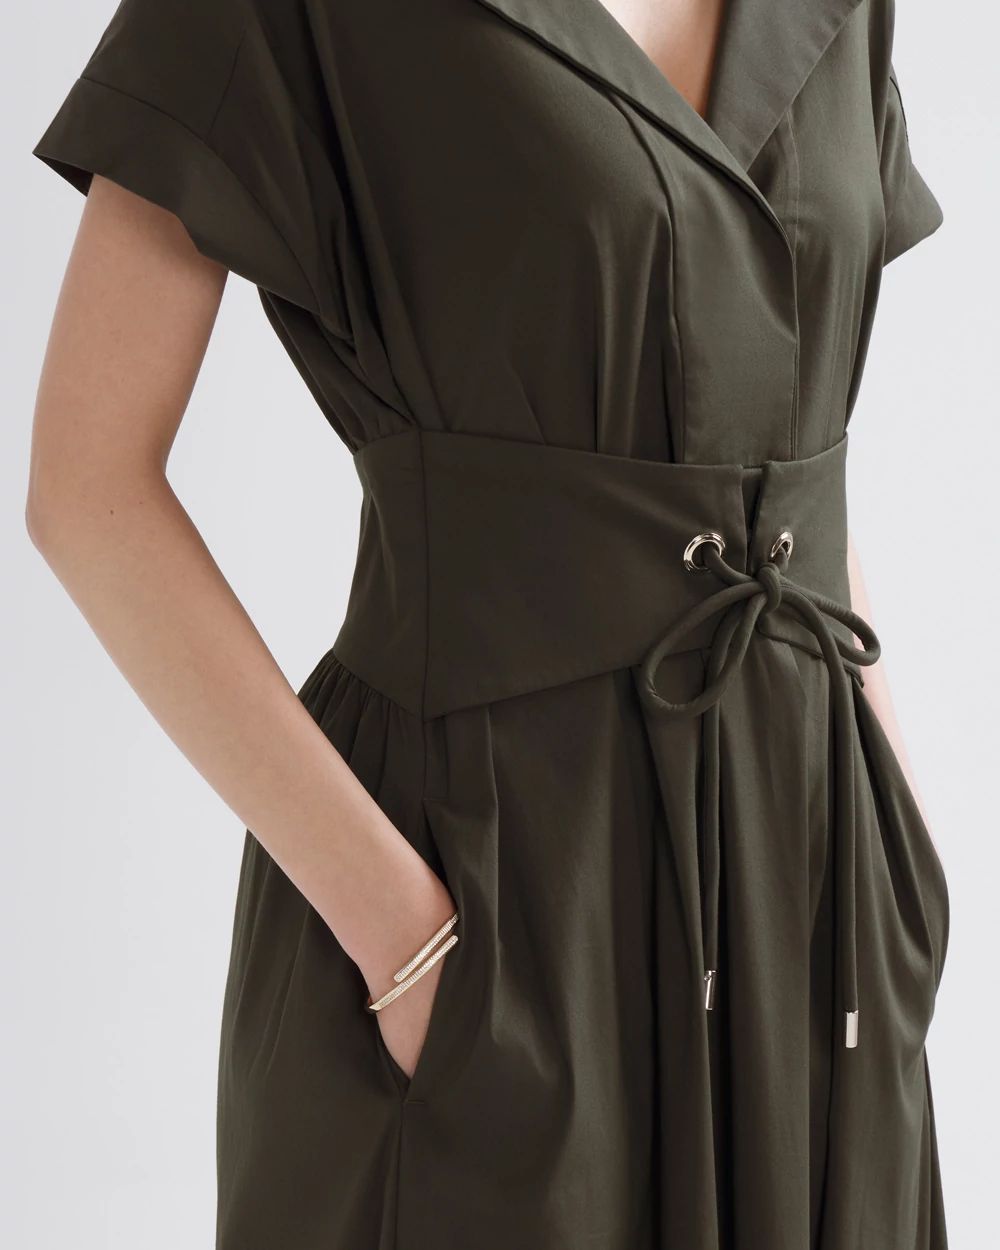 Petite Short Sleeve Collar Poplin Midi Dress click to view larger image.